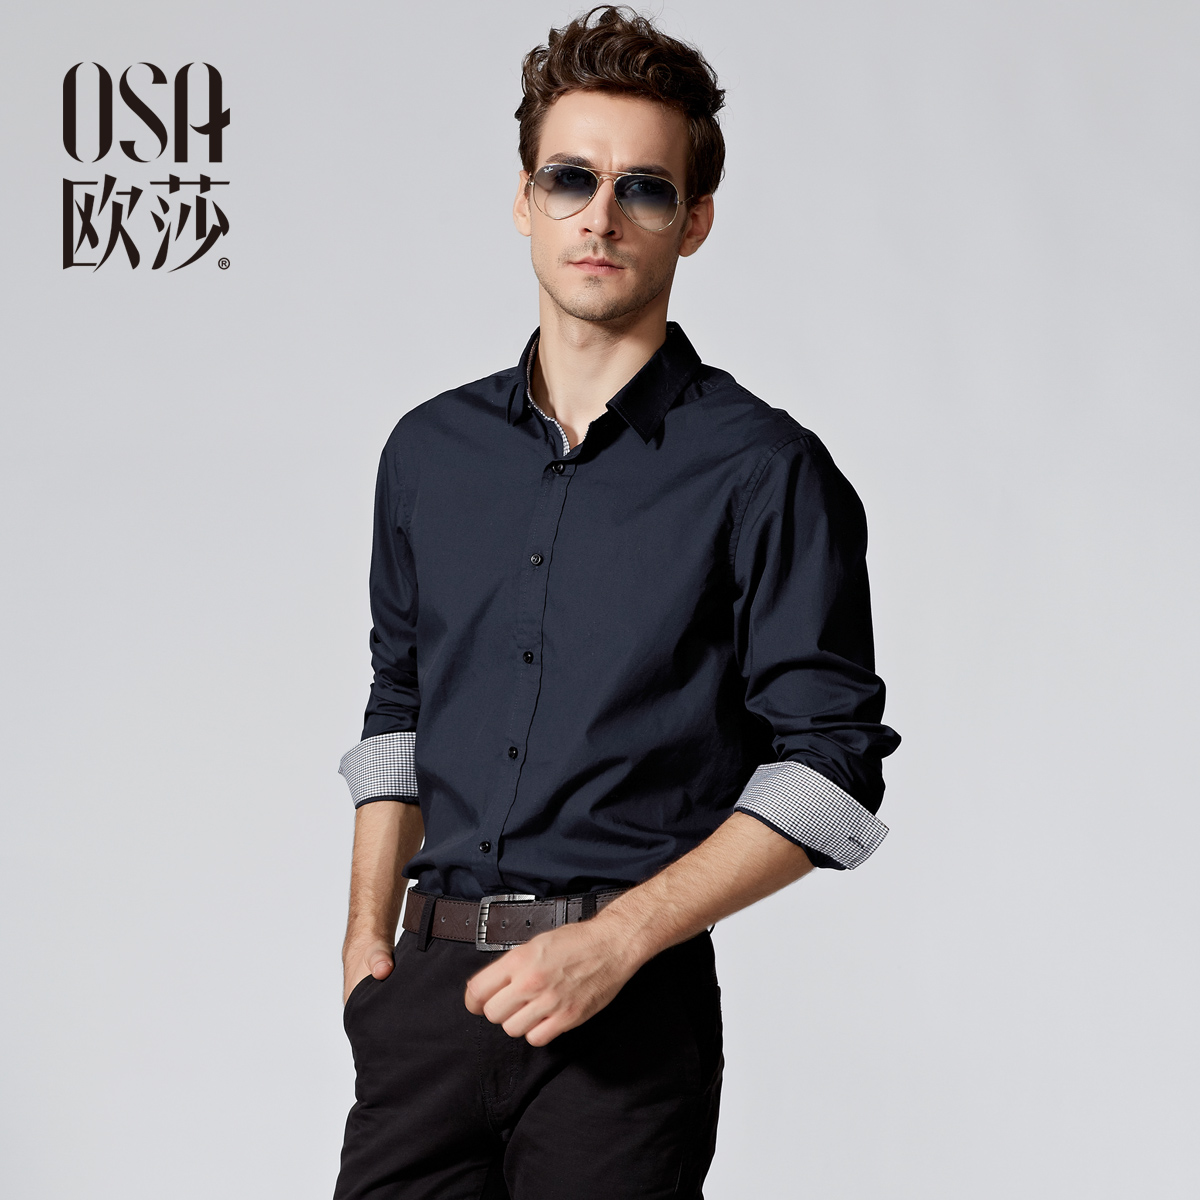 OSA欧莎2014春季新品男装衬衣打底衫衣服上衣长袖衬衫MC420008